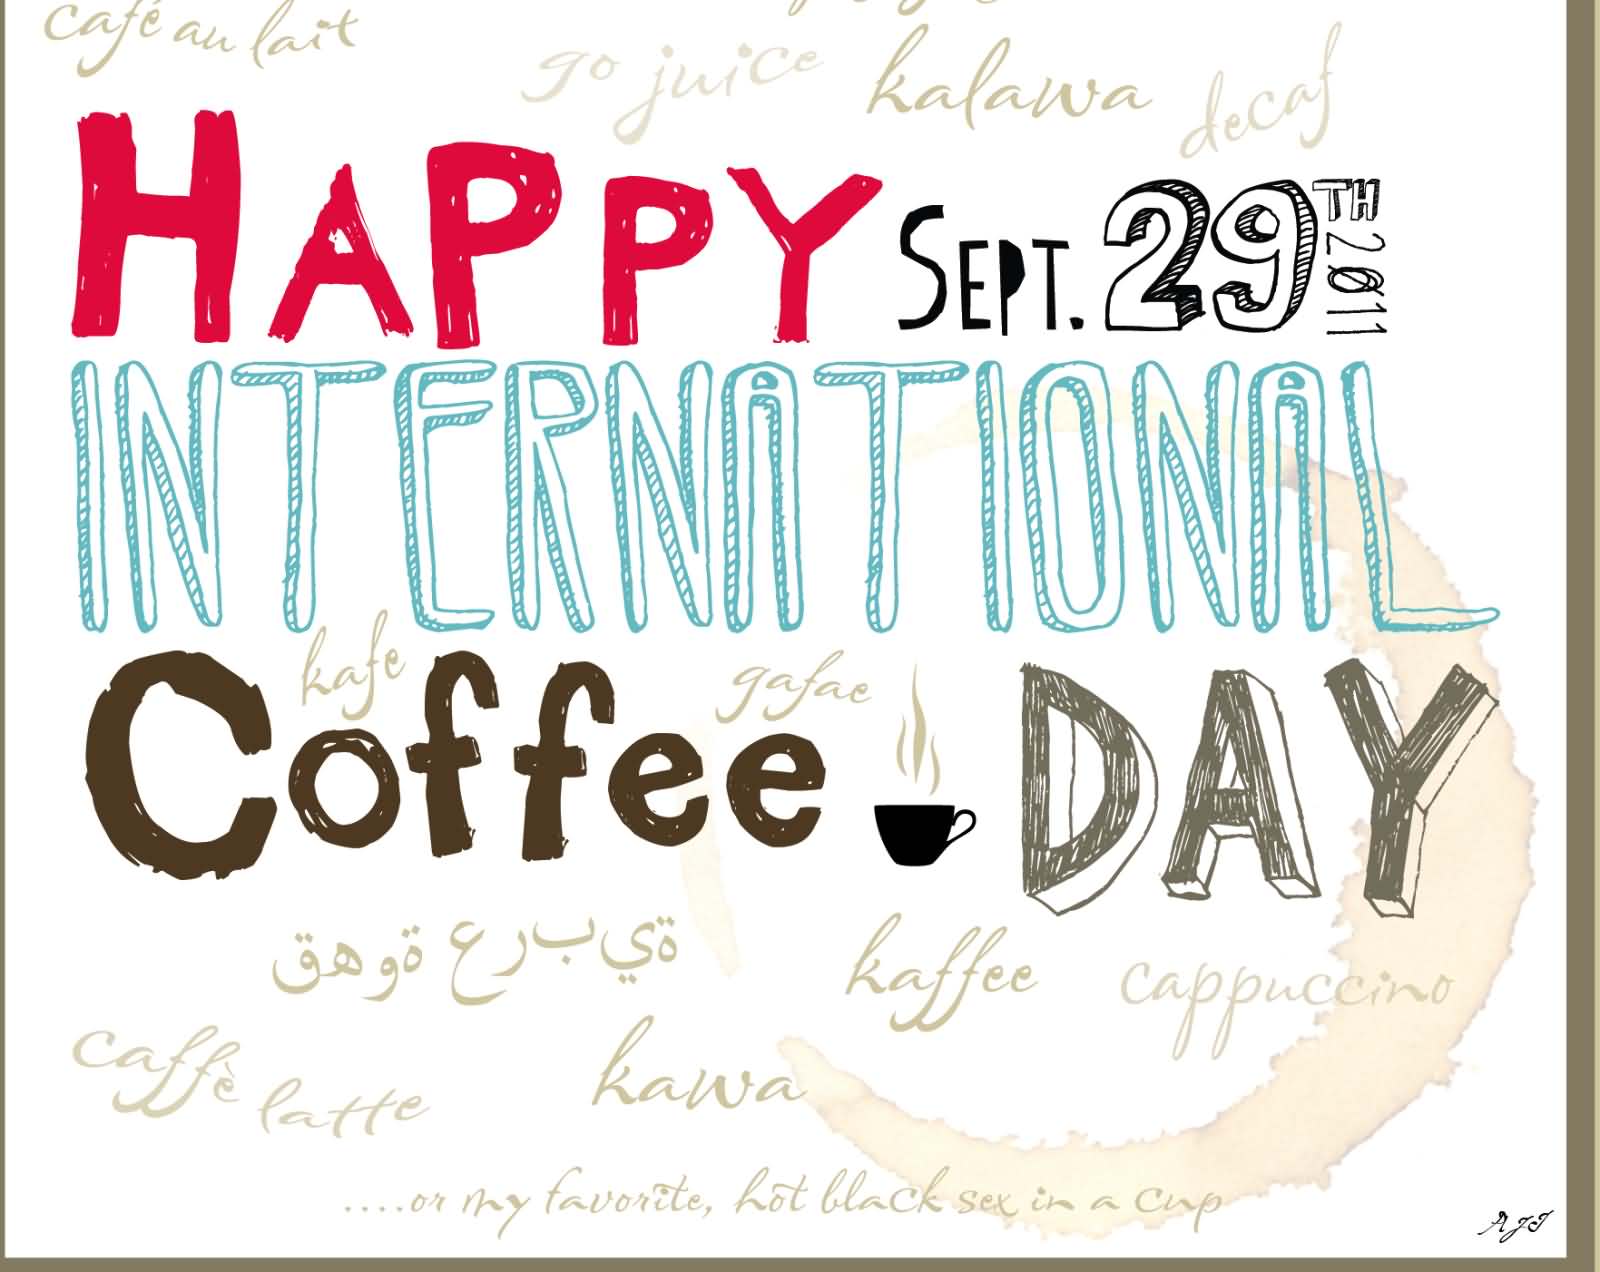 Happy International Coffee Day 29th September